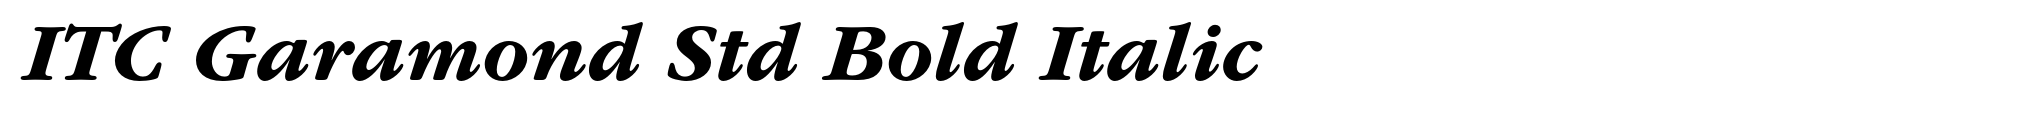 ITC Garamond Std Bold Italic image